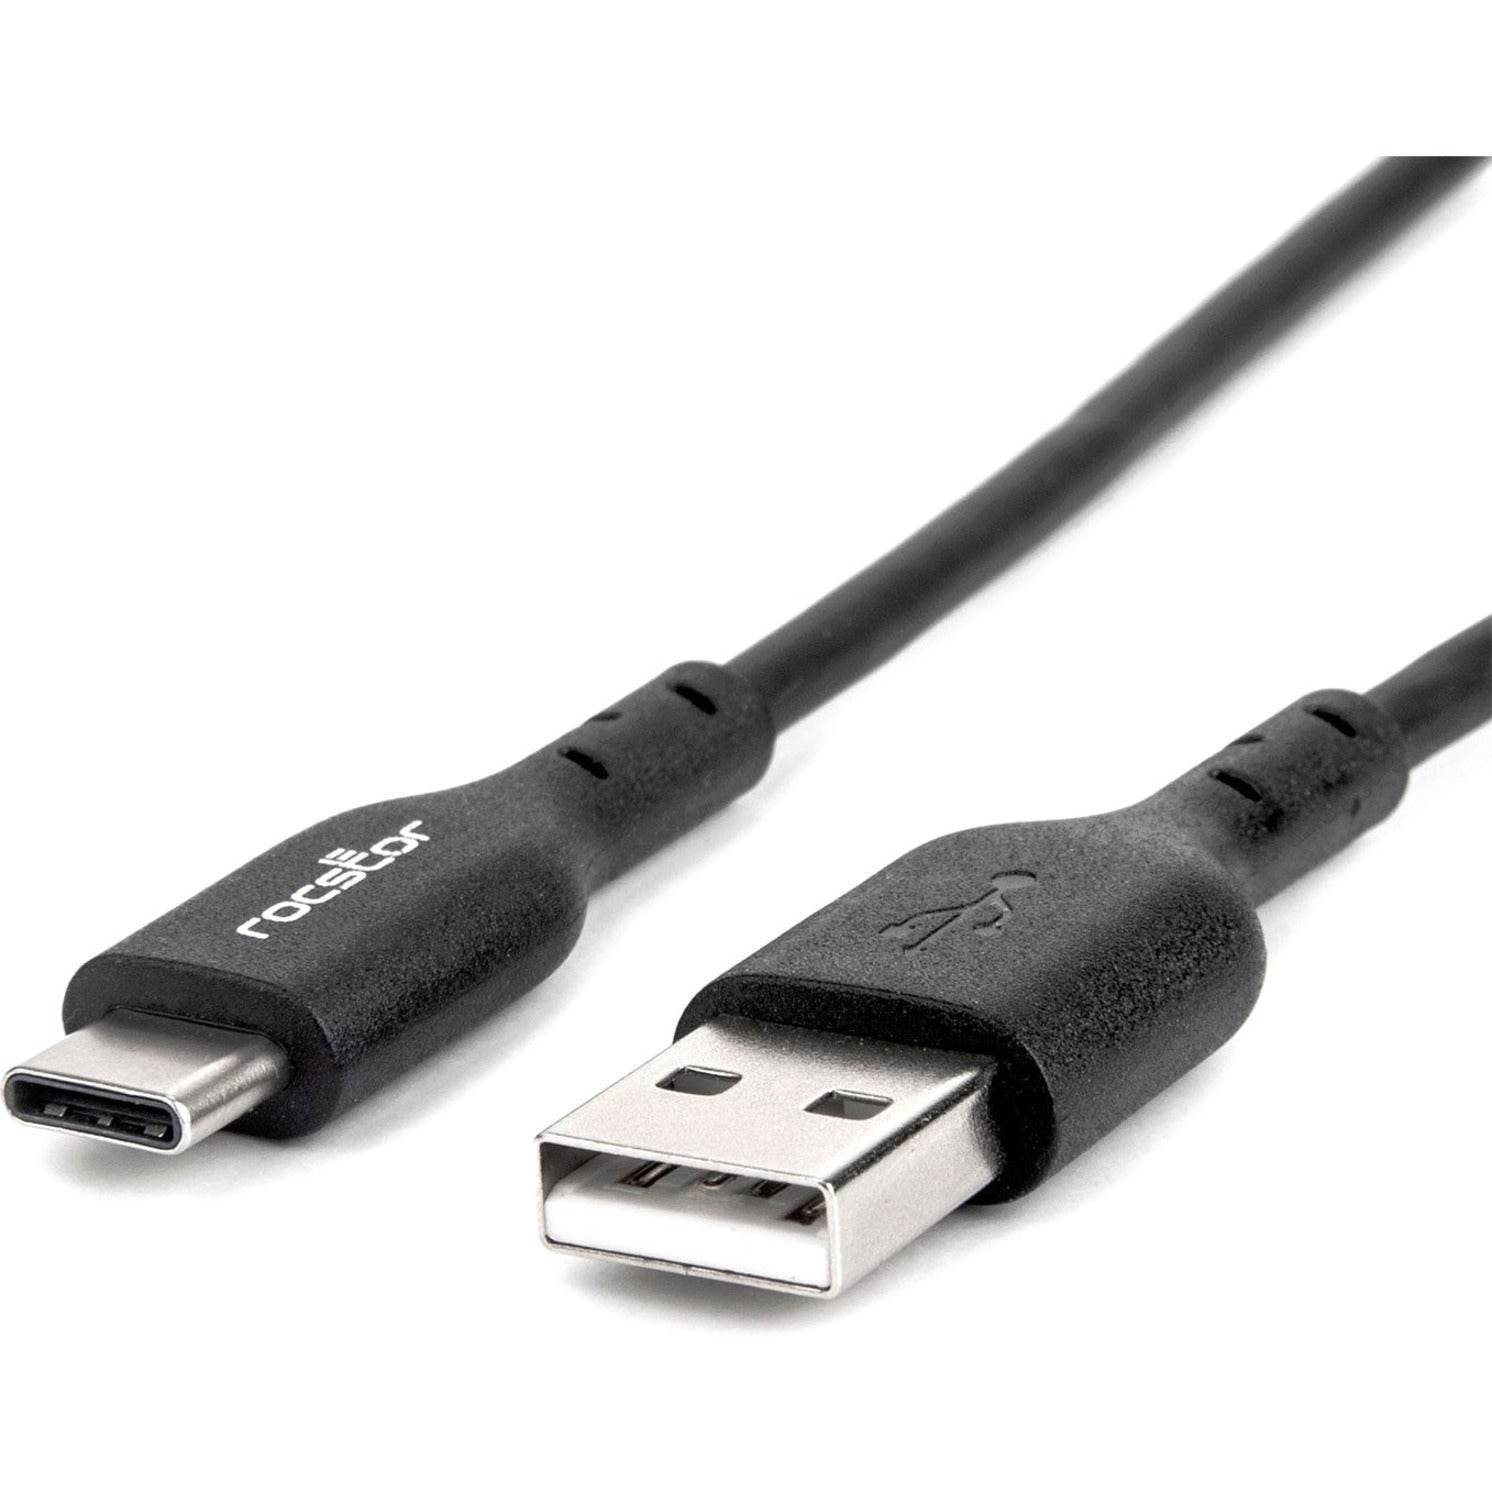 Rocstor Y10C144-B1 Premium USB Data Transfer Cable, 3 ft, Reversible, Black